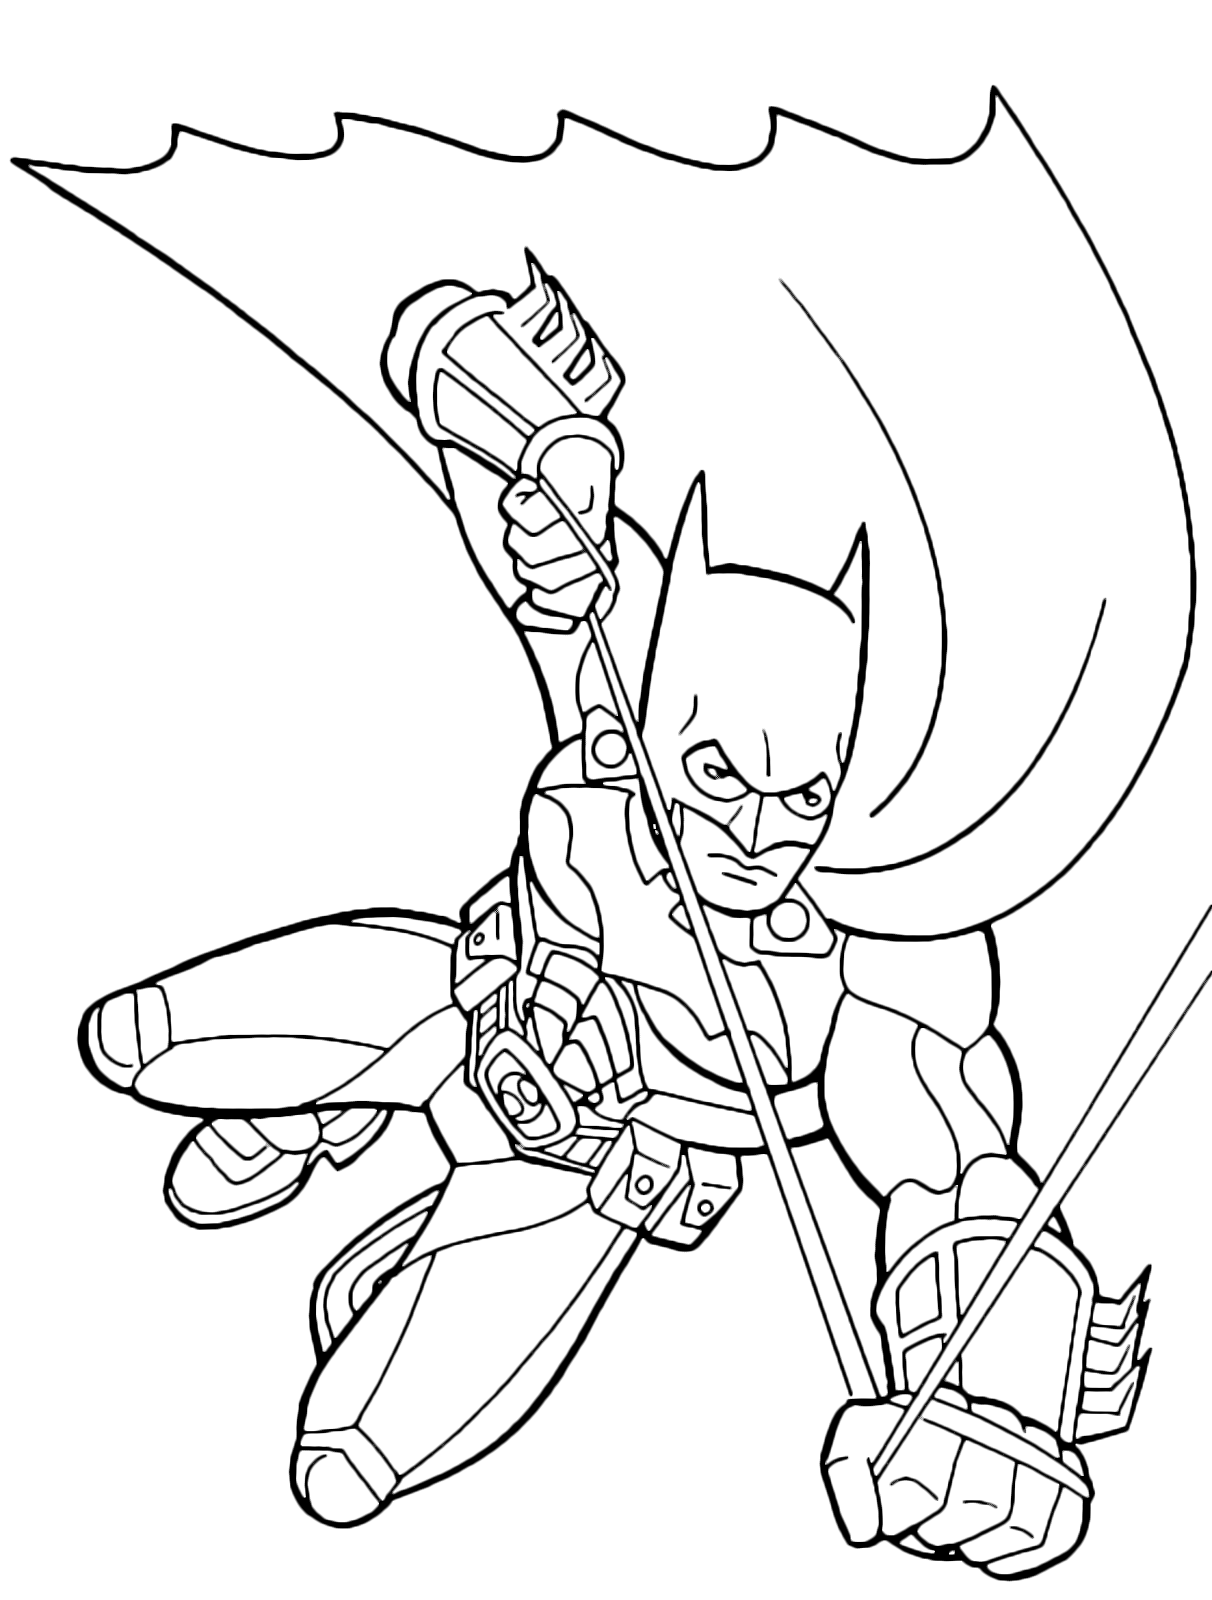 Batman - Batman usa la corda e si lancia nel vuoto